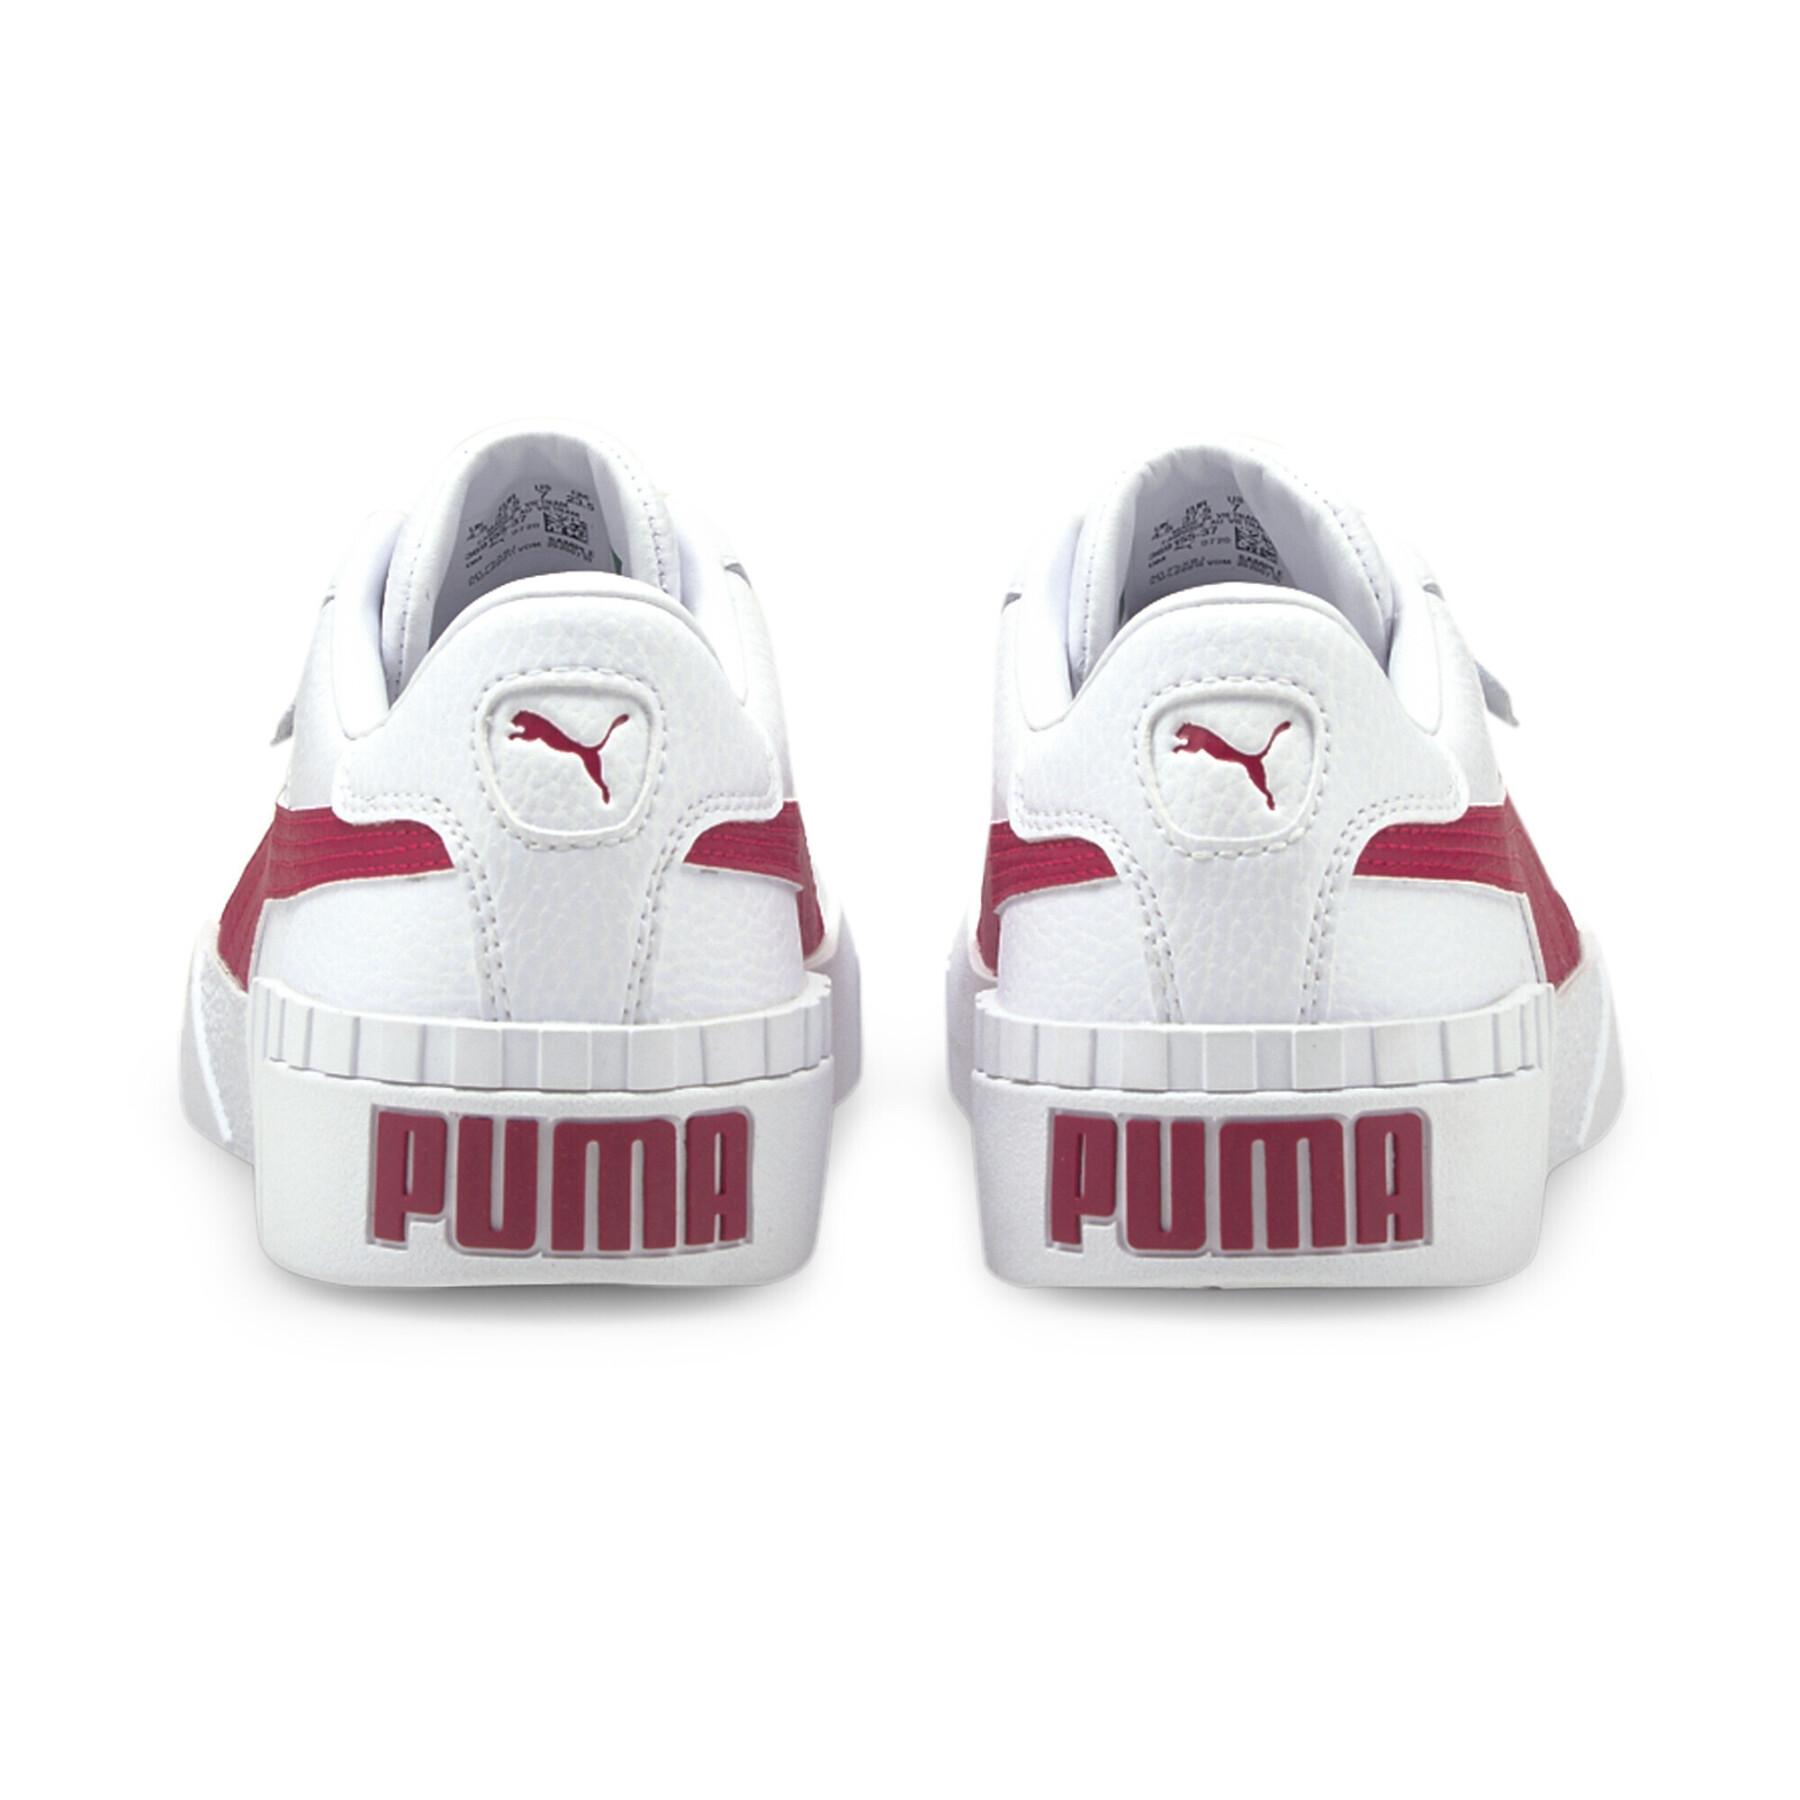 Women's sneakers Puma Cali S